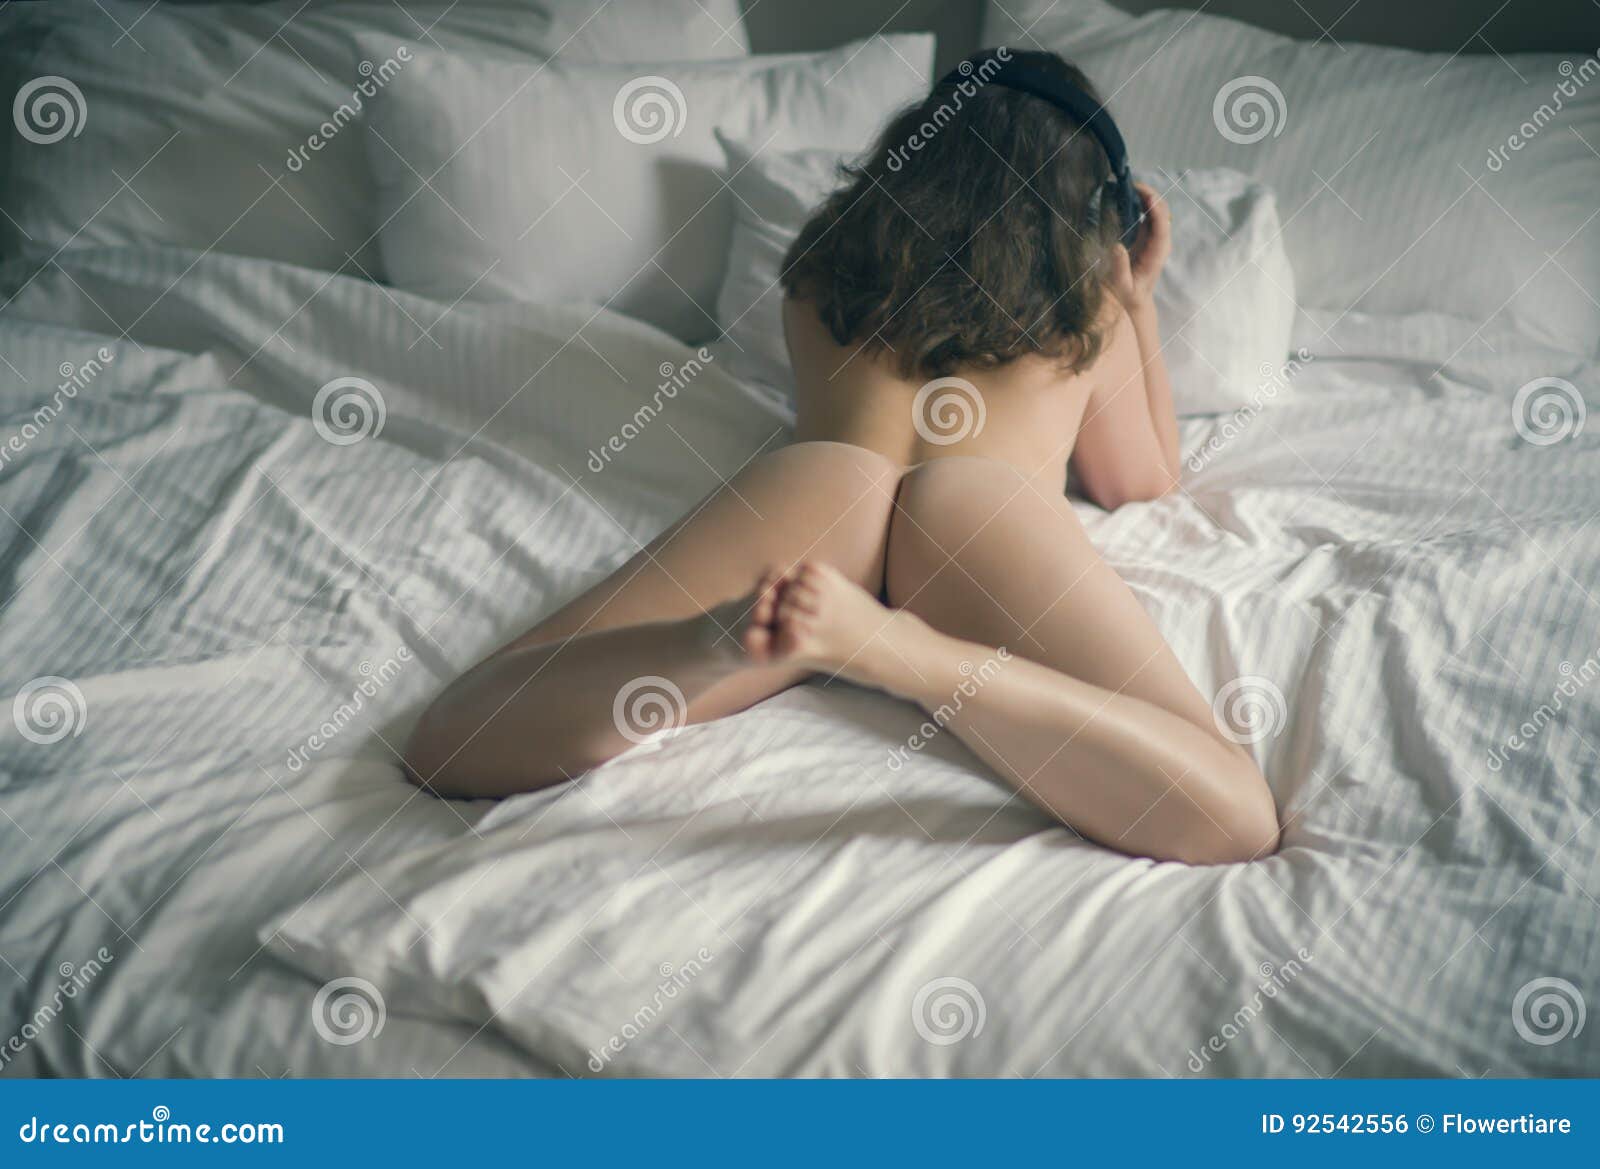 braeden skinner add topless girl in bed photo